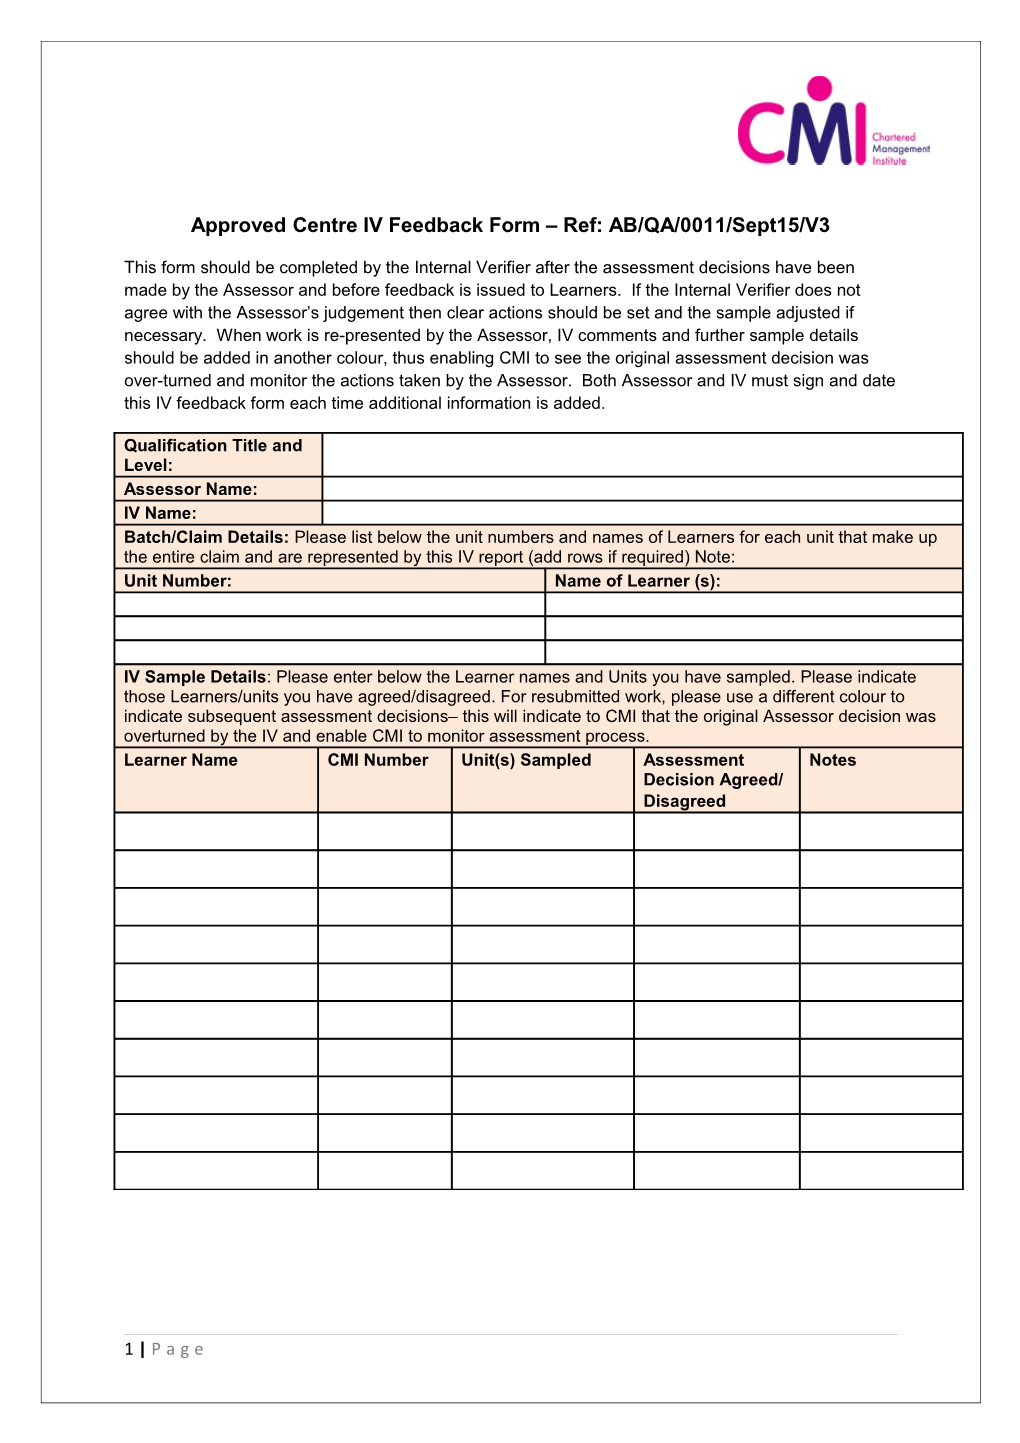 Approved Centre IV Feedback Form Ref: AB/QA/0011/Sept15/V3